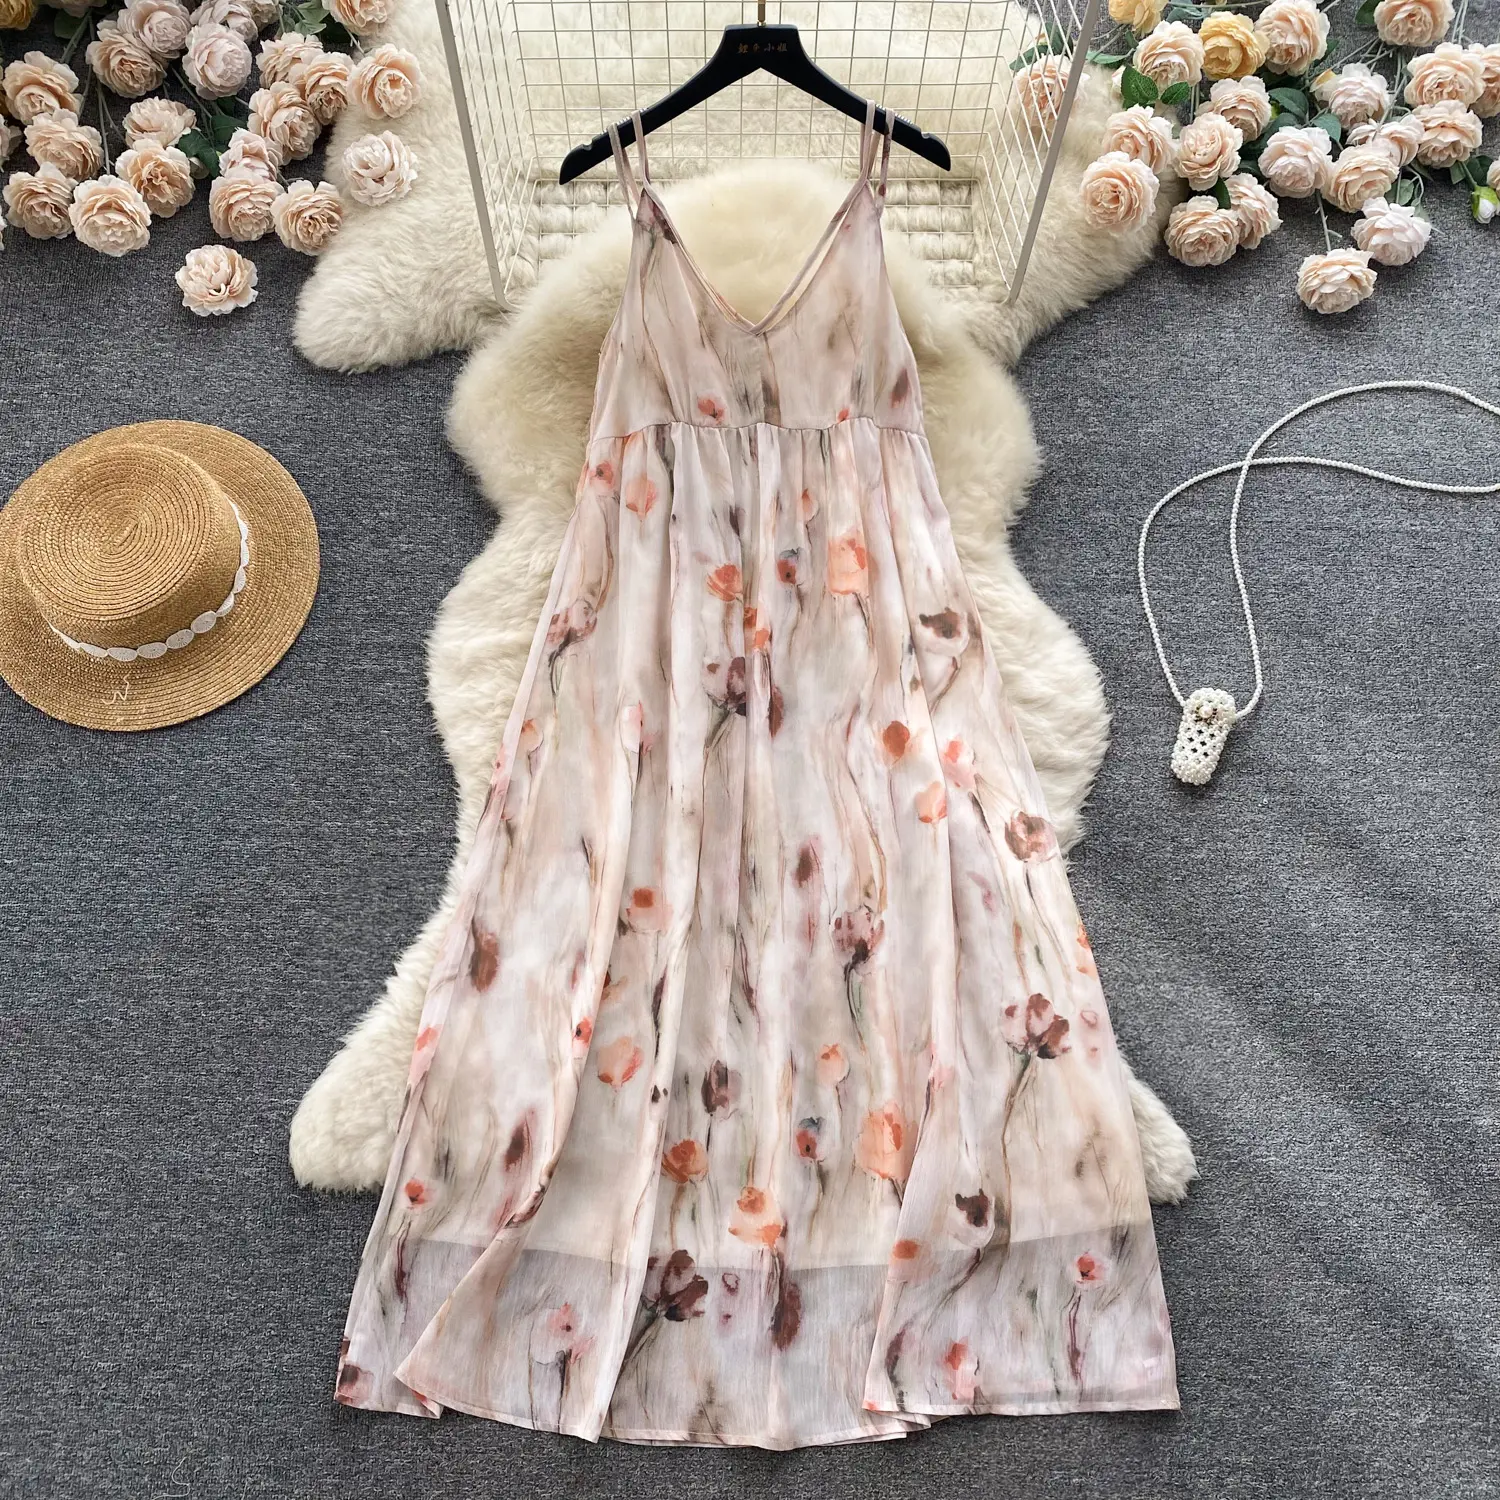 Geo'Peck Women Elegant Vintage V Neck Floral Print Dress Suspender Frocks Sleeveless Dress Beach Outfit Casual Halter Long Dress